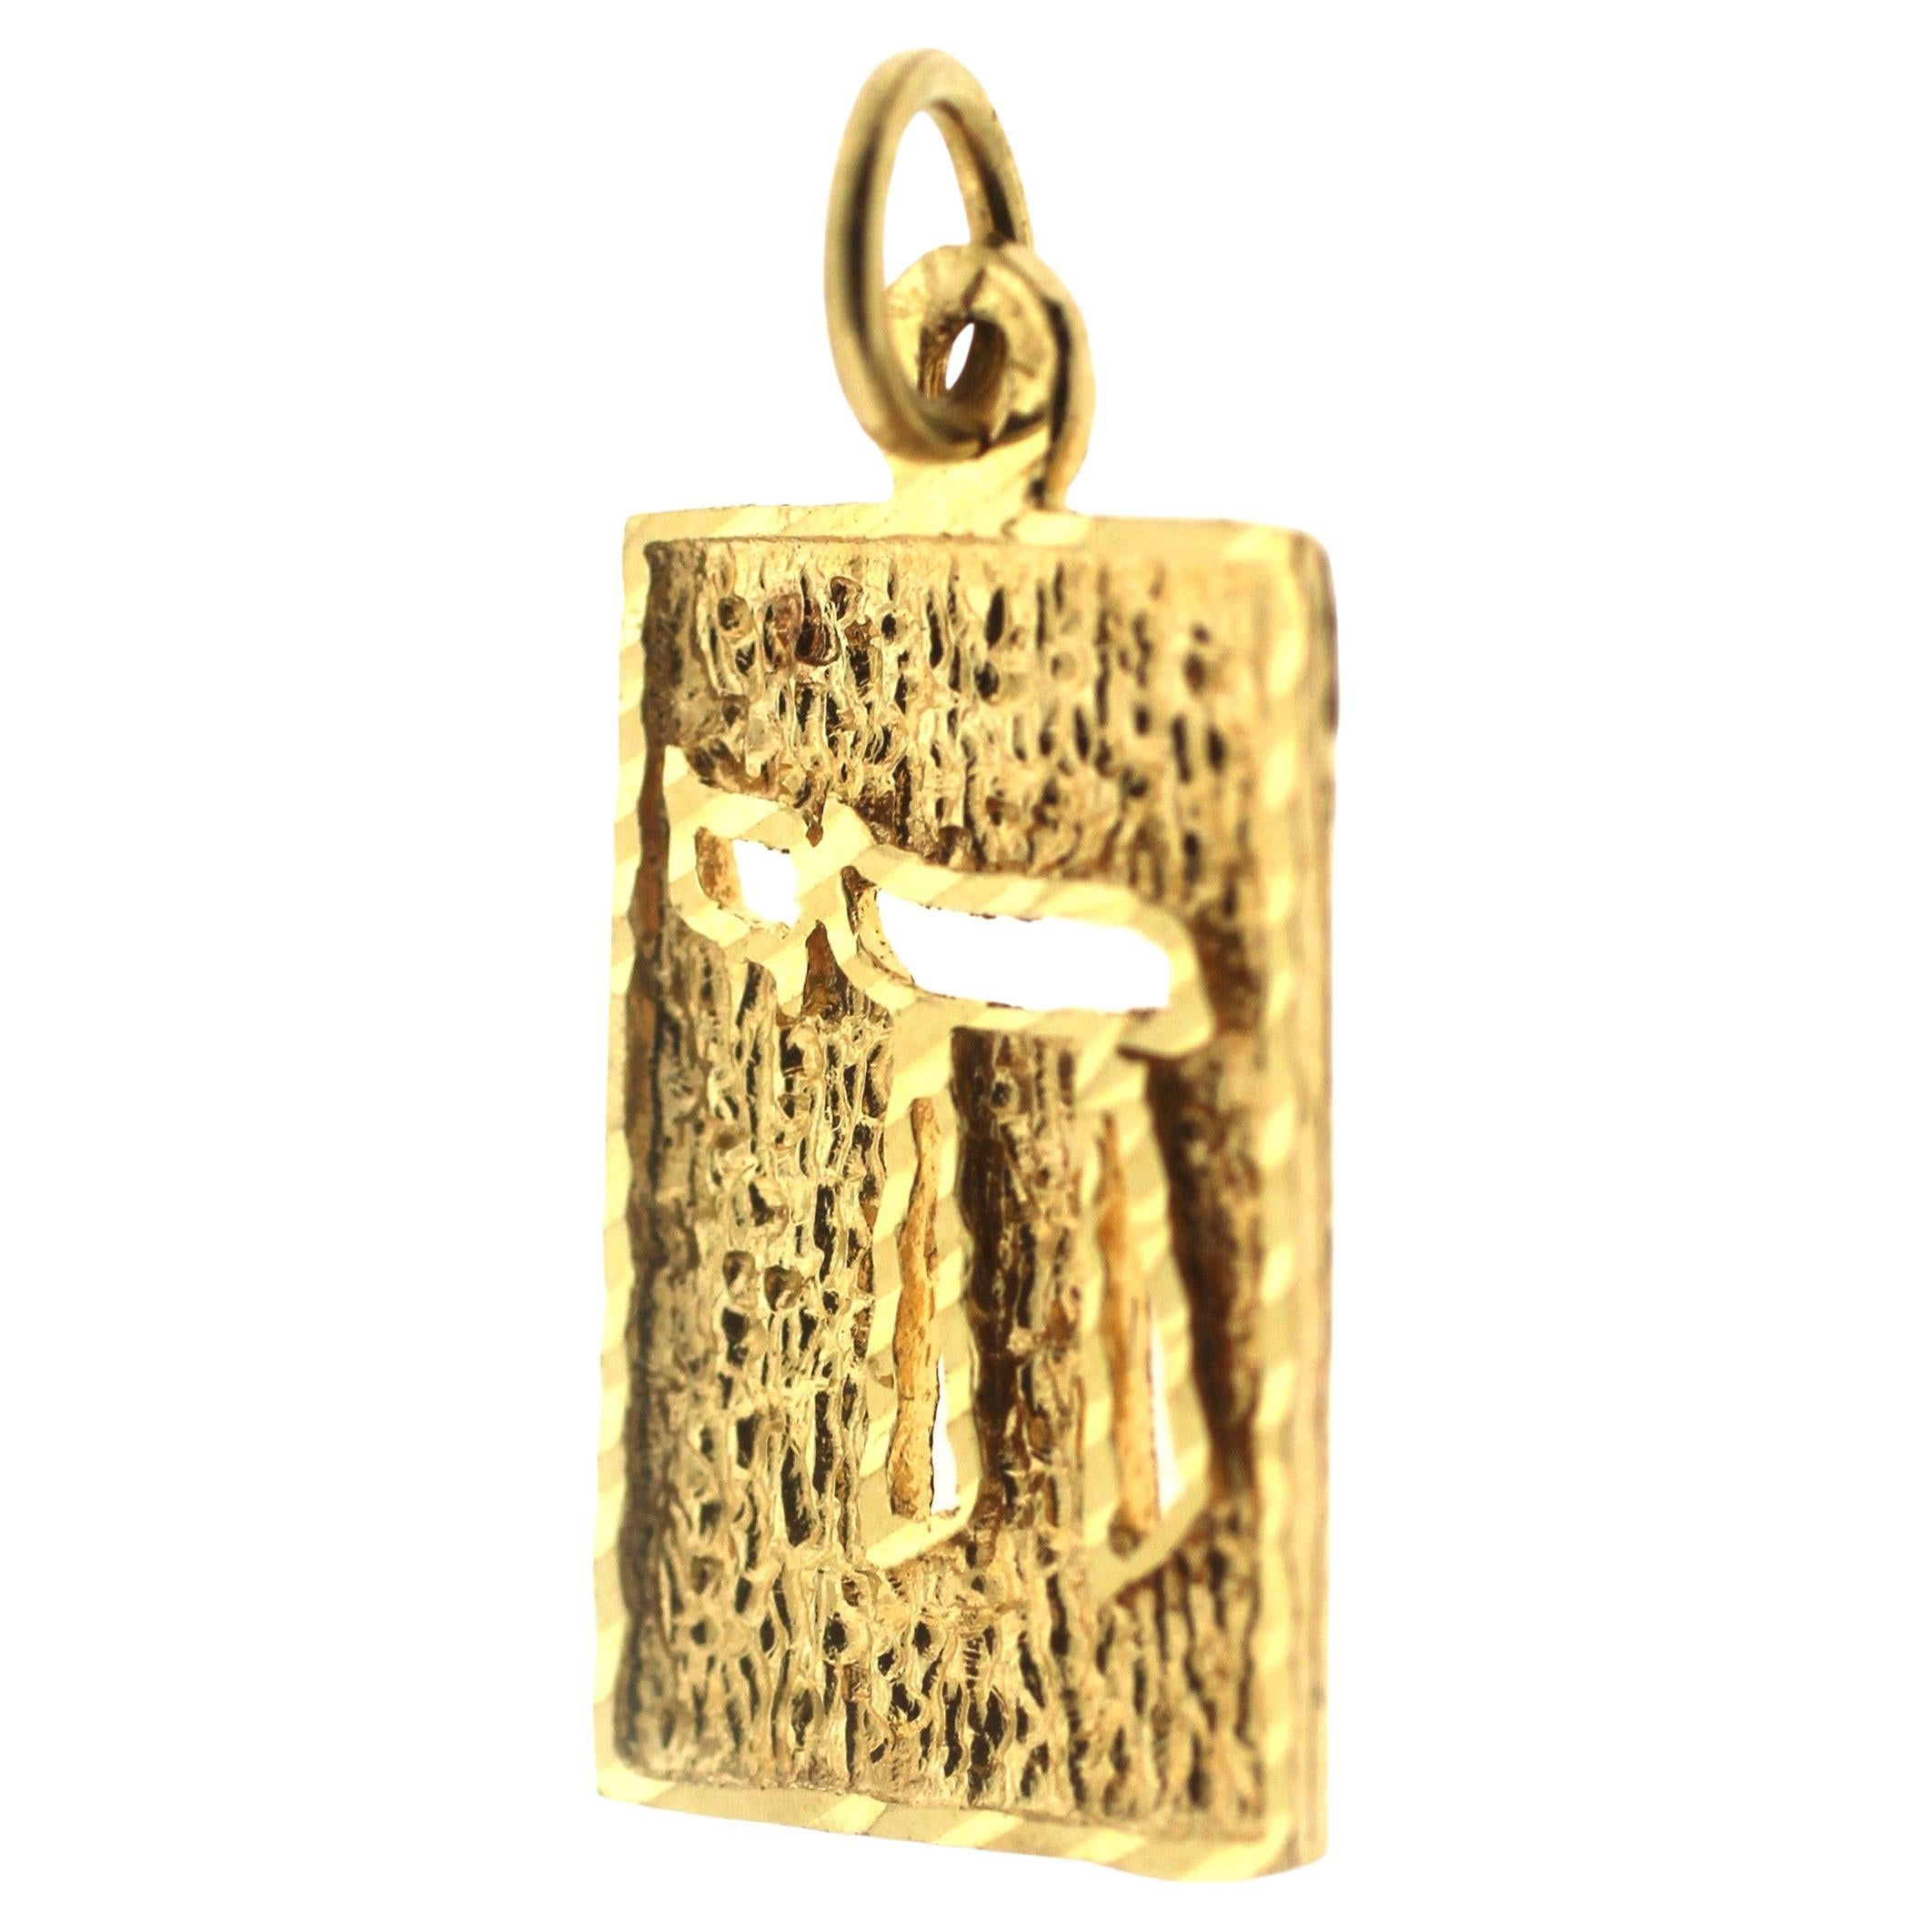 Golden Jewish chai khai Hai pendant Judacia Charm necklace
No Gold K stamp